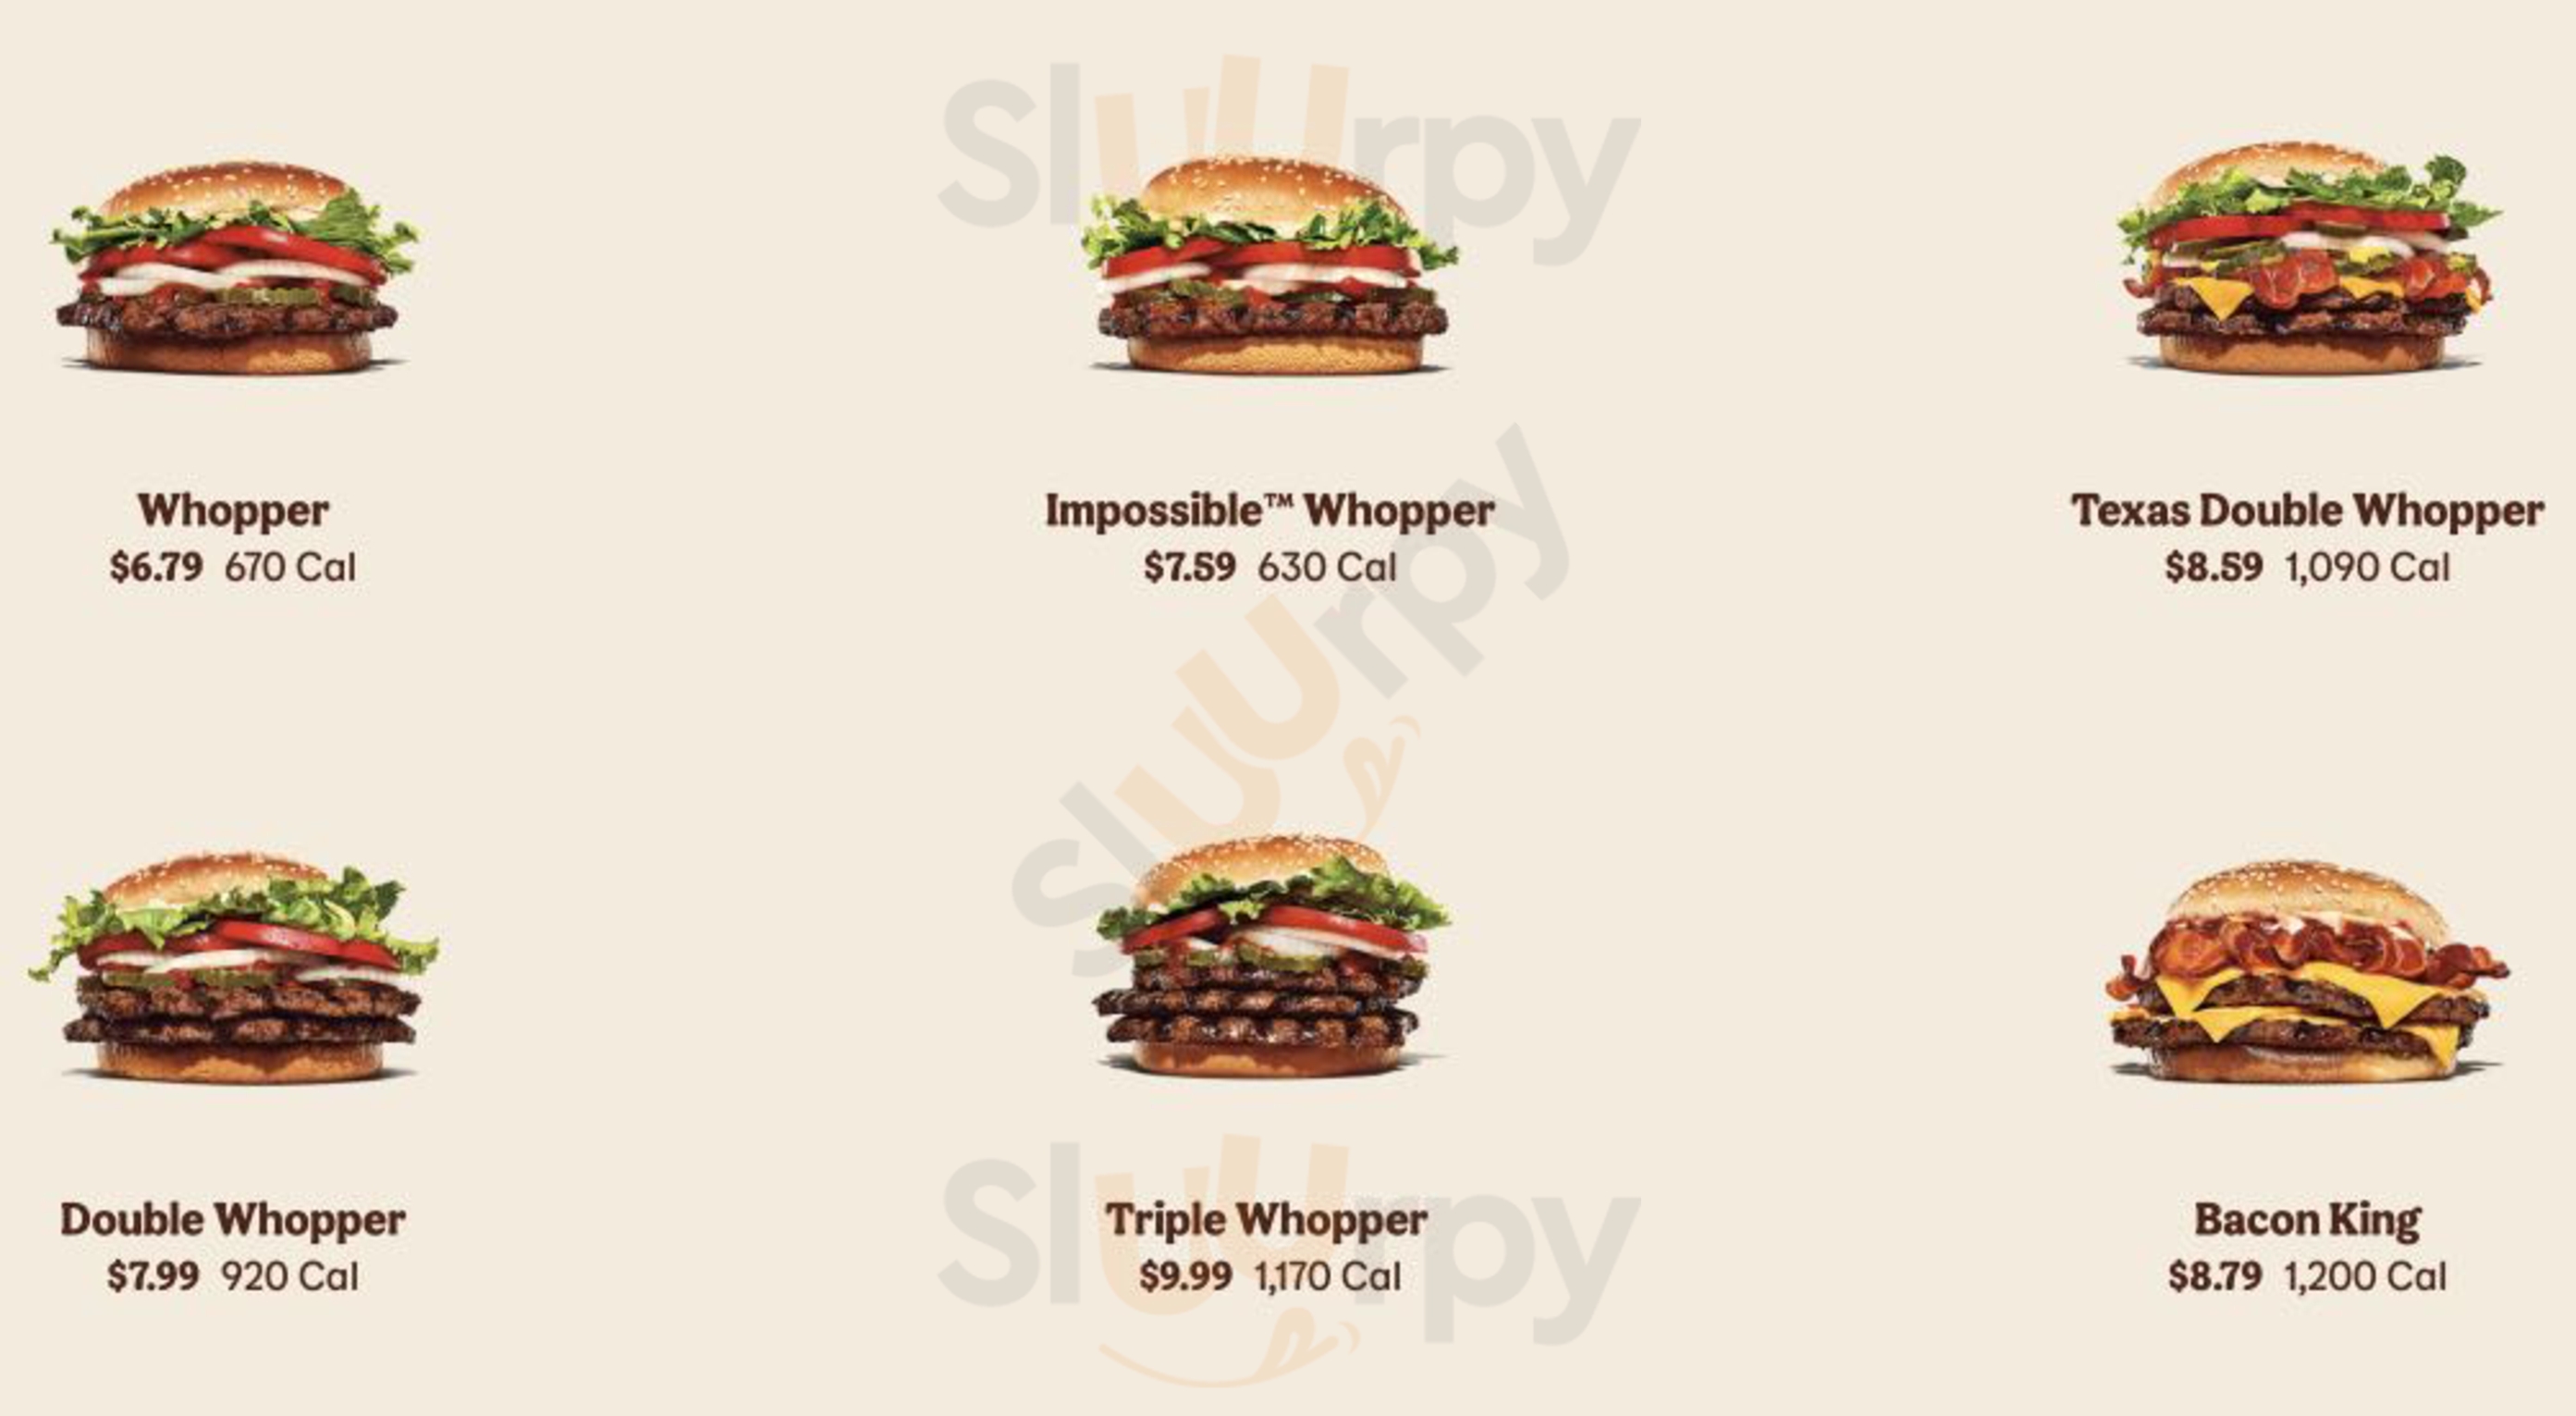 Burger King Denver Menu - 1